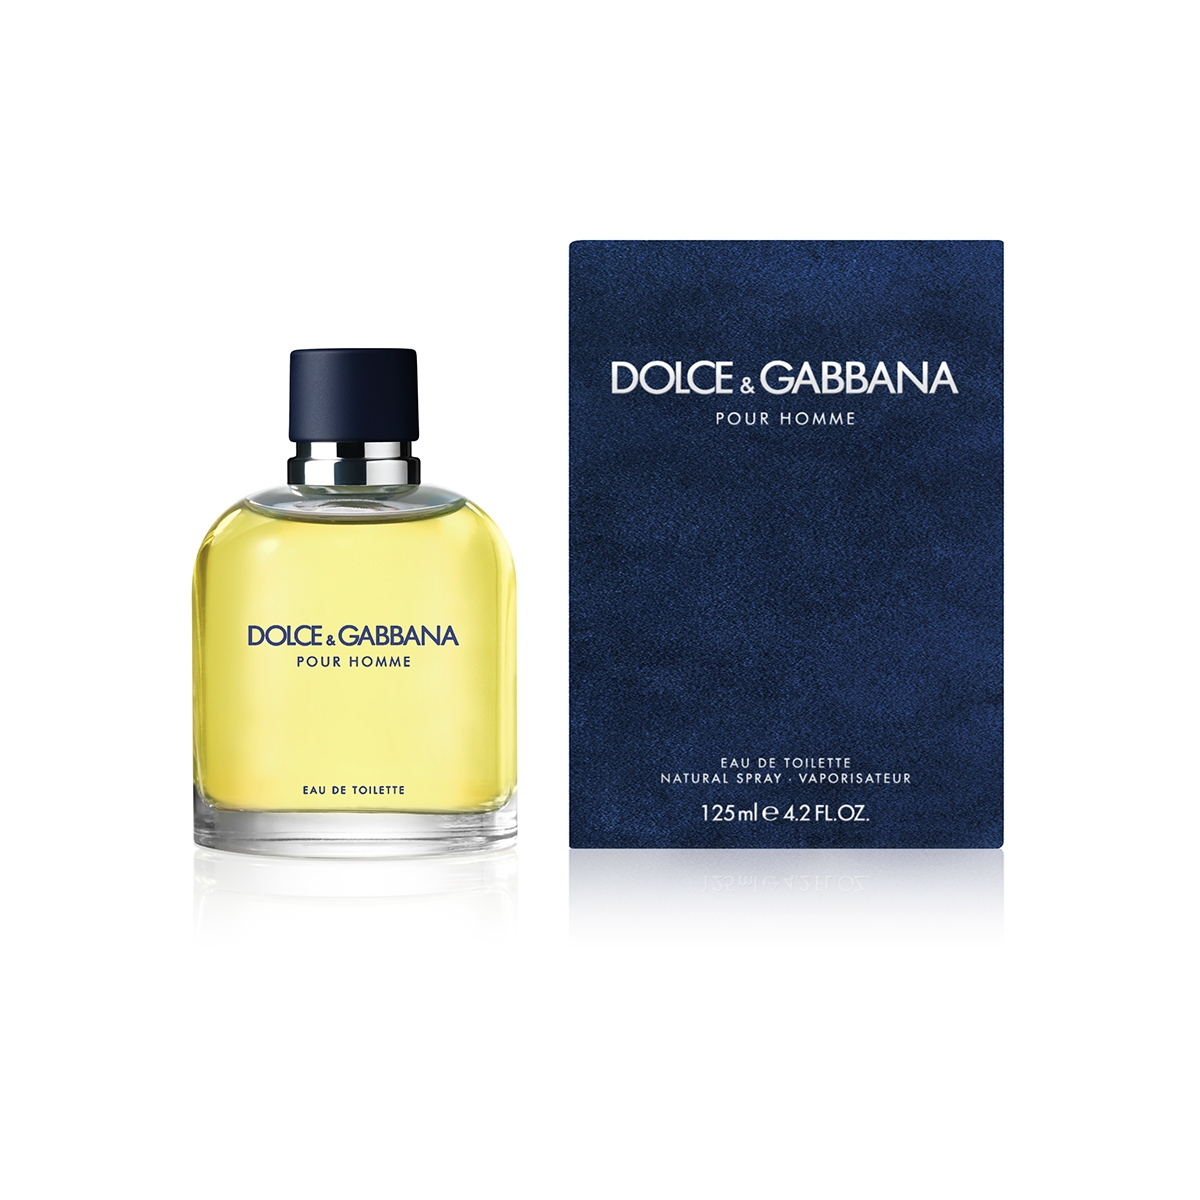 Купить Туалетная вода Dolce & Gabbana, Dolce & Gabbana Pour Homme 125.0ml тестер, Италия